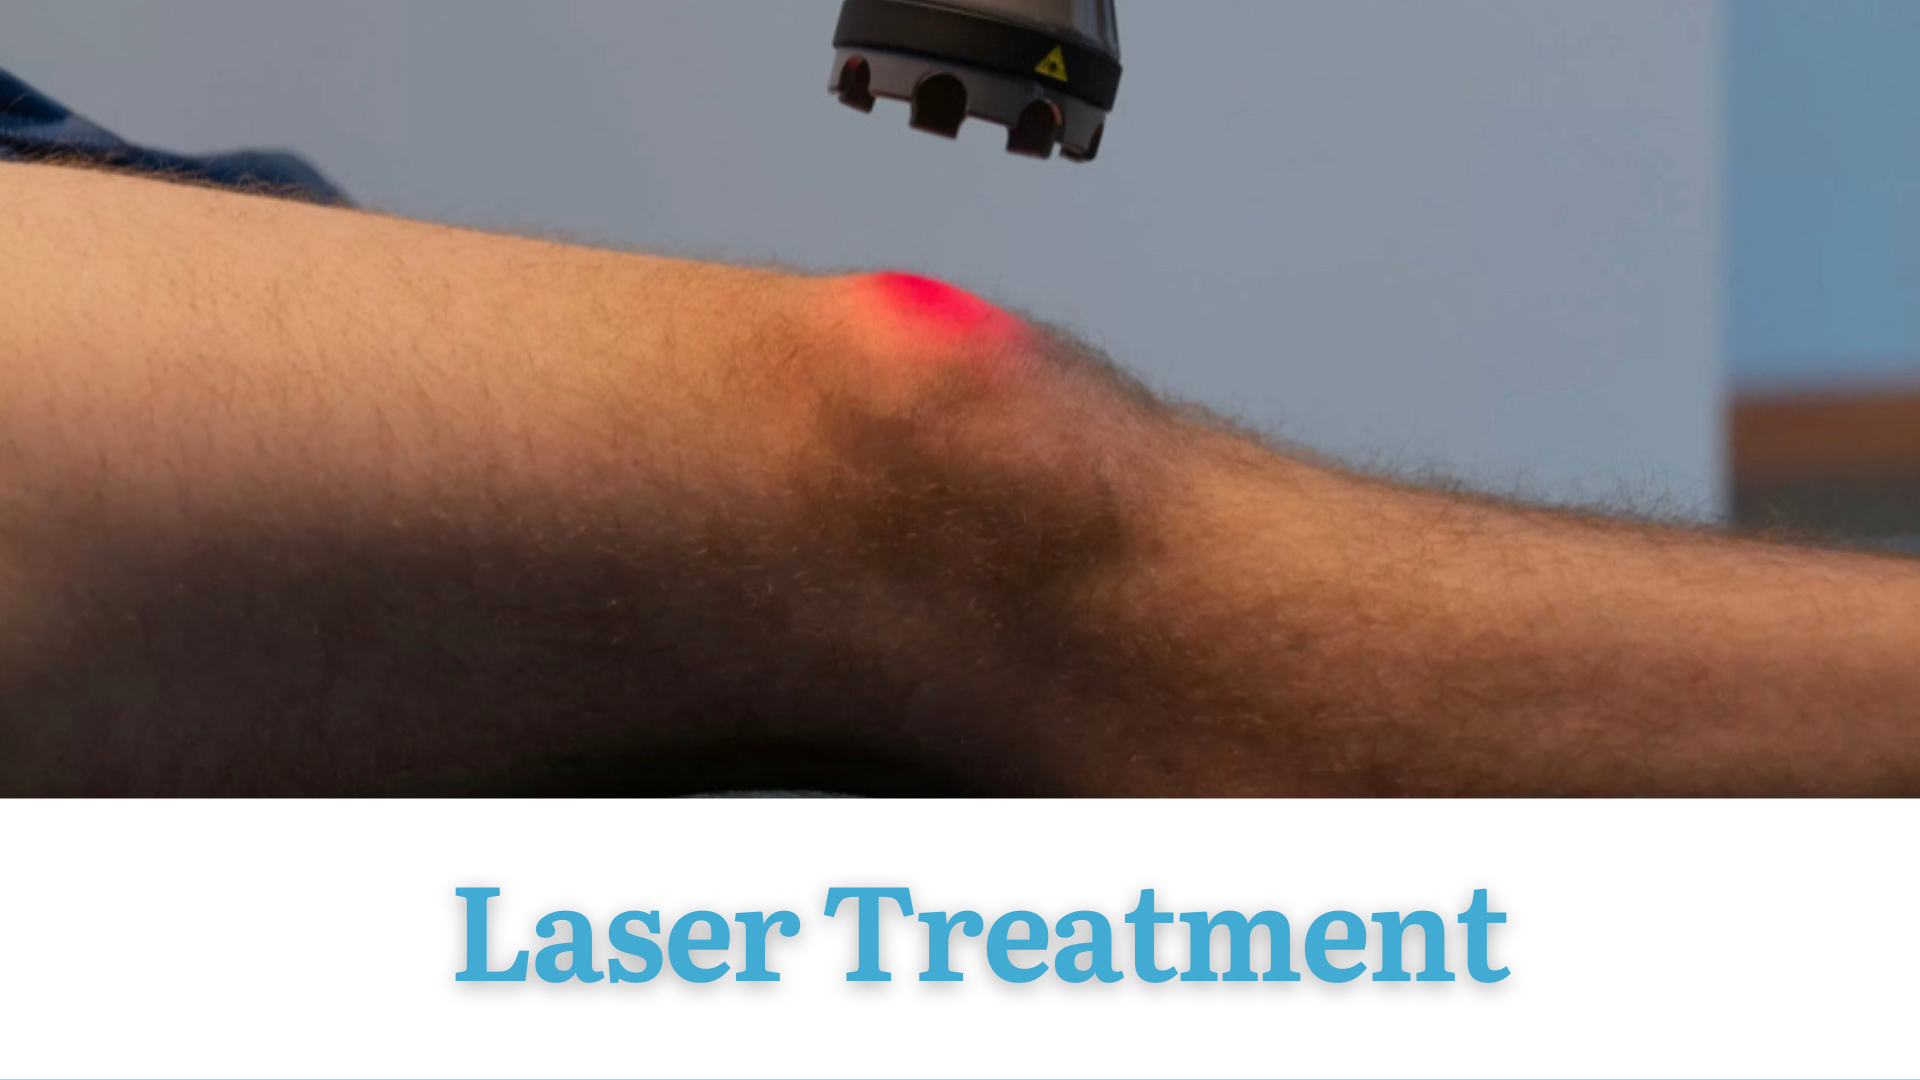 Regular laser scarring treatment